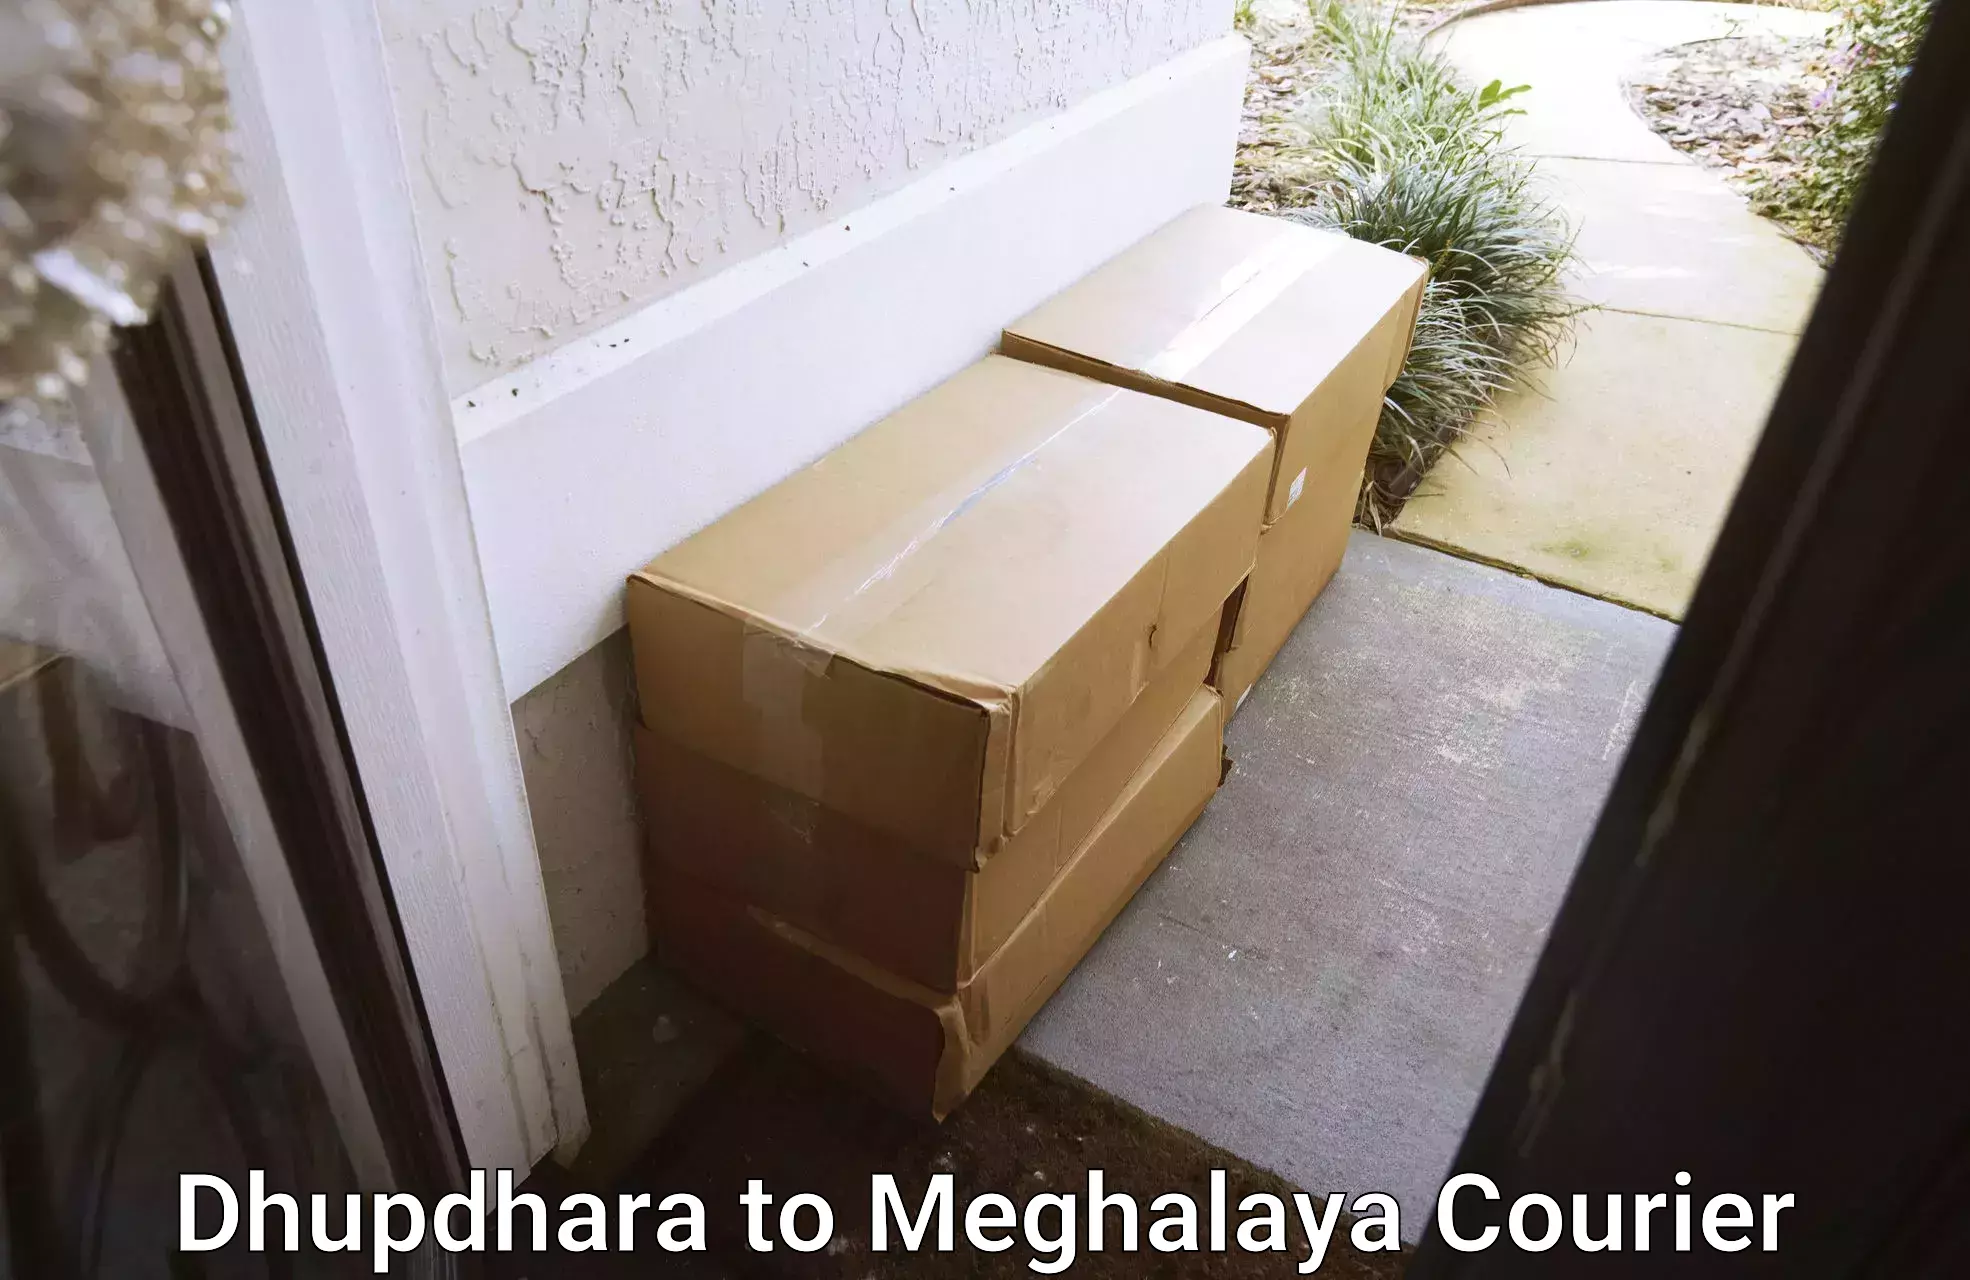 High-performance logistics in Dhupdhara to Meghalaya